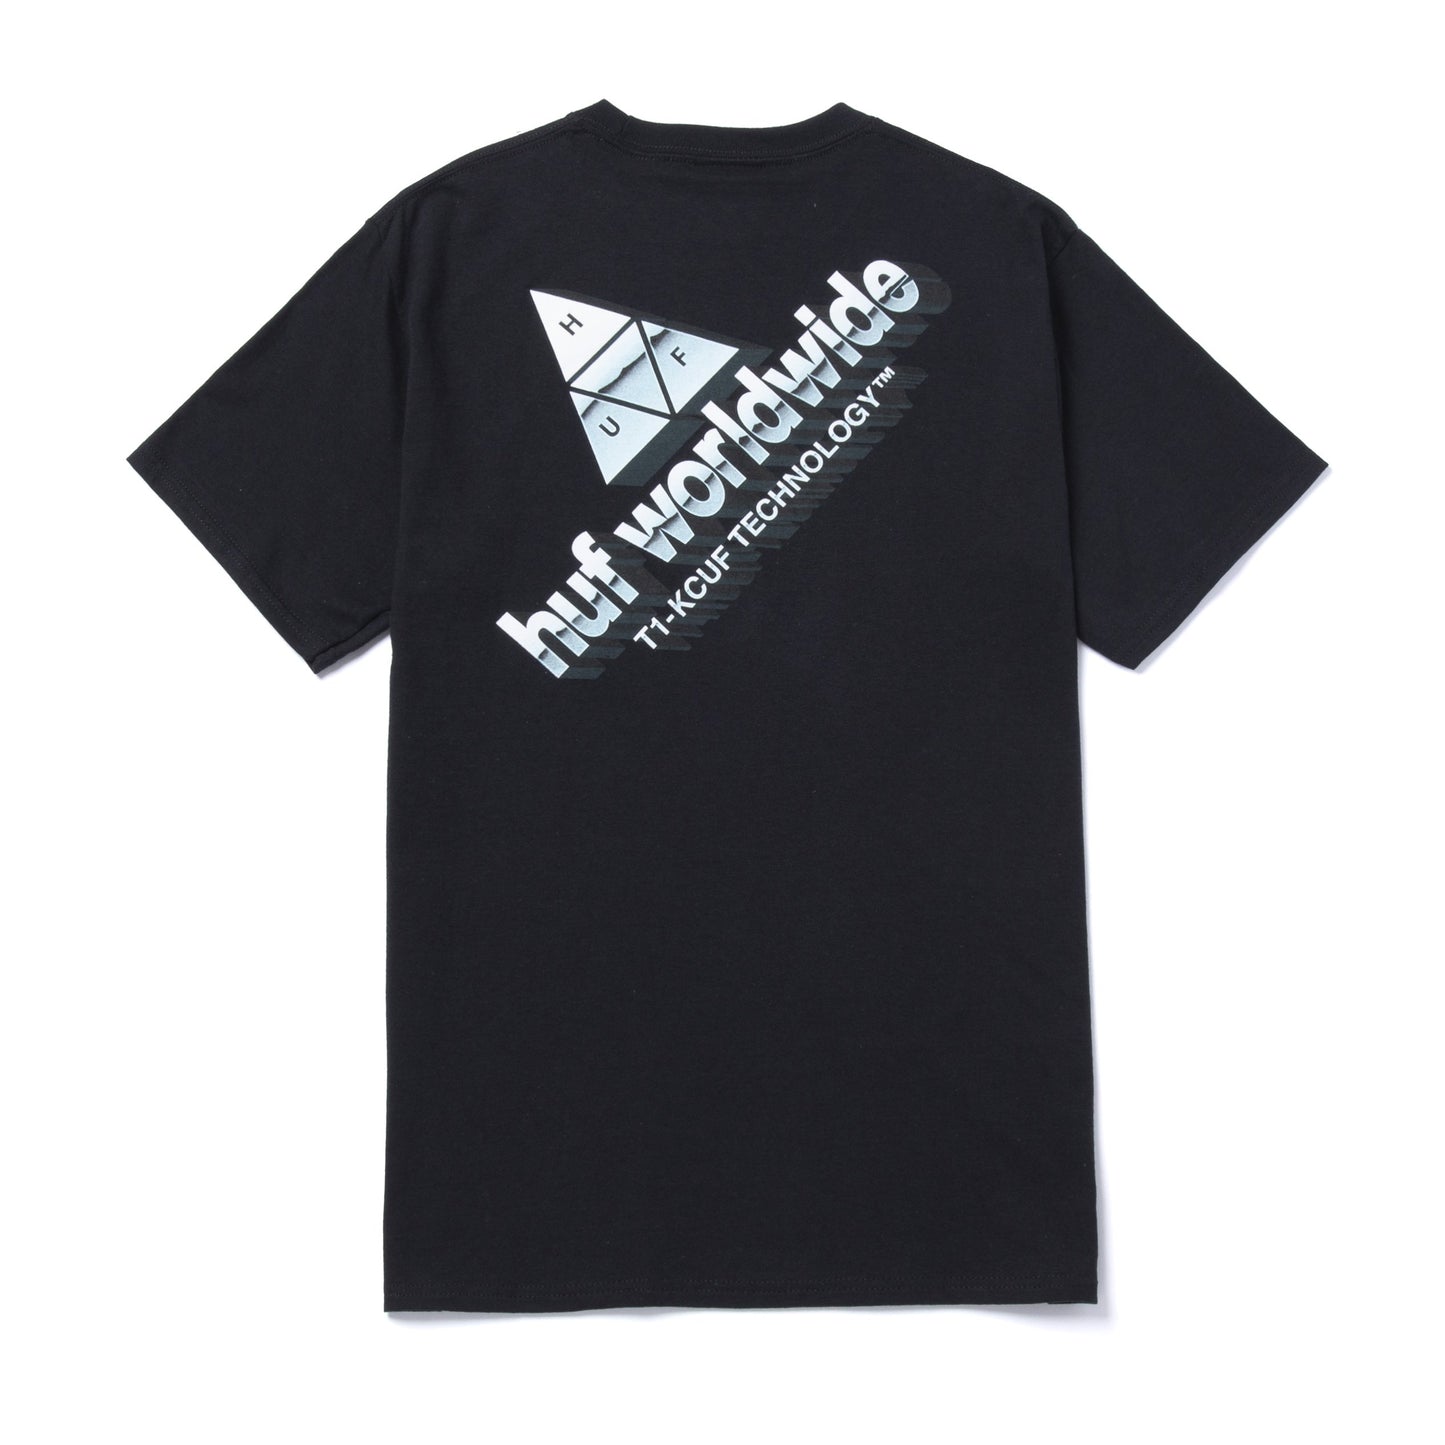 HUF Peak Tech T-Shirt